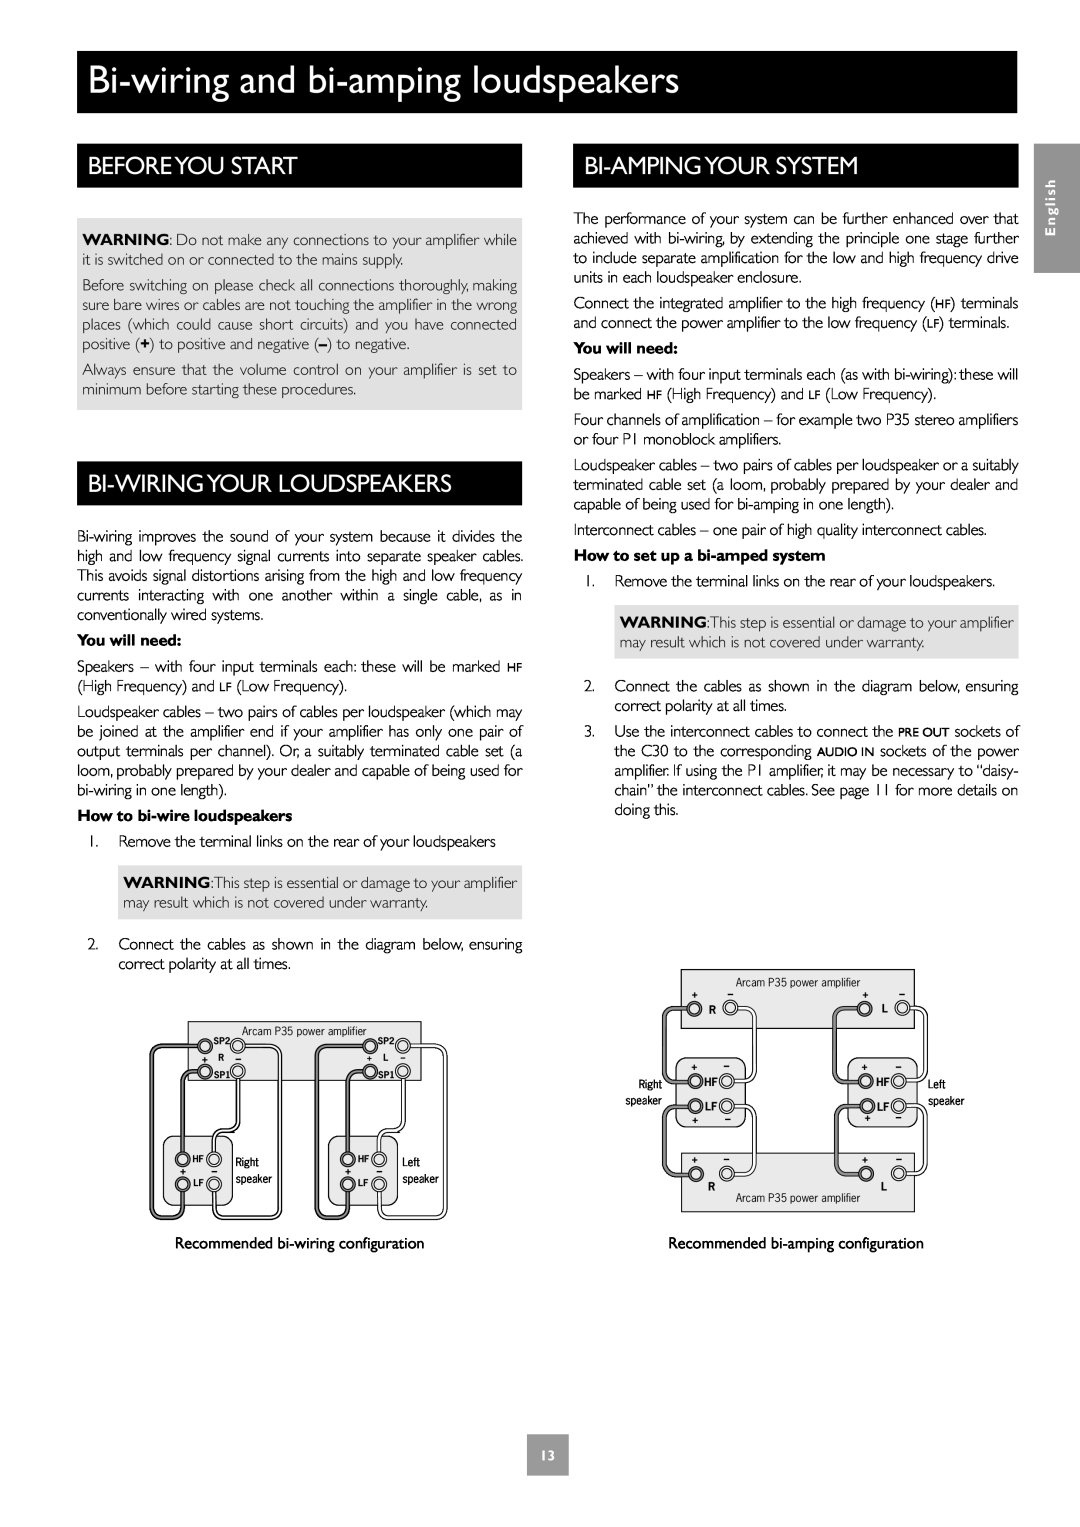 Arcam P35 manual Bi-wiringand bi-ampingloudspeakers, Beforeyou Start, Bi-Wiringyourloudspeakers, Bi-Ampingyoursystem 